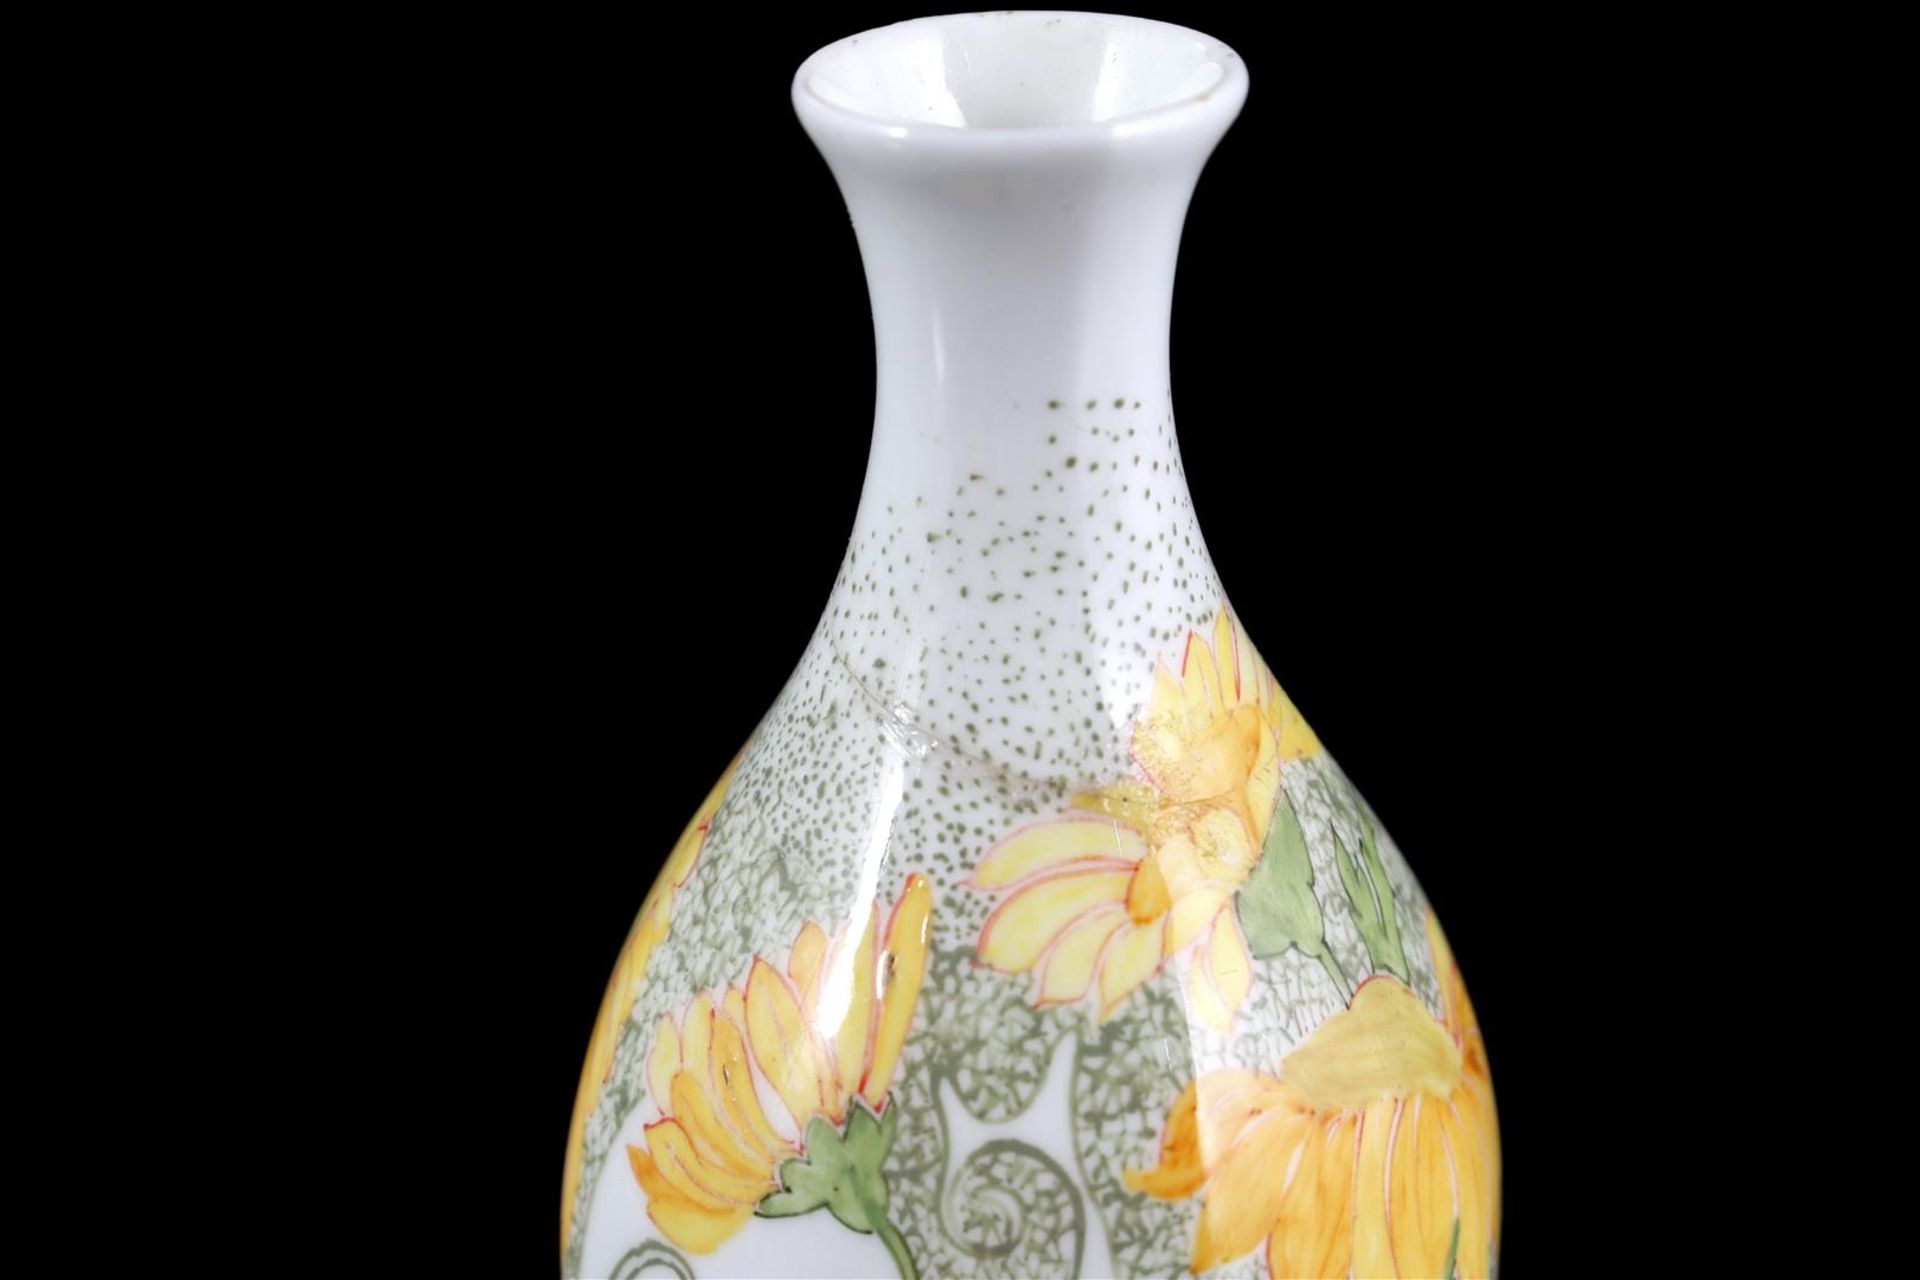 Rozenburg The Hague eggshell porcelain vase with floral decor - Image 7 of 7